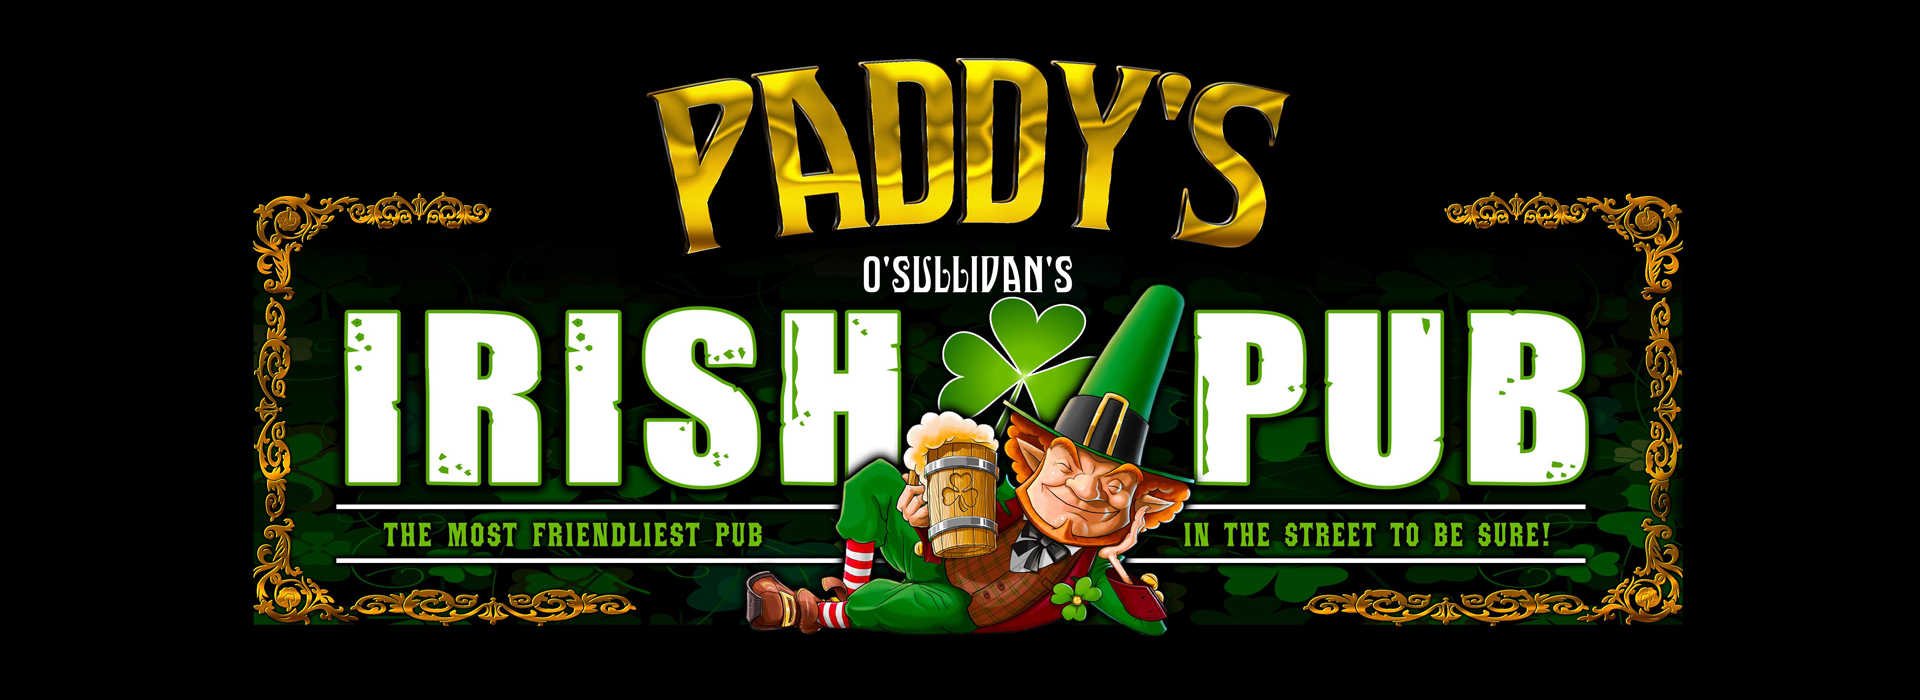 Paddy's Irish Pub with leprechaun